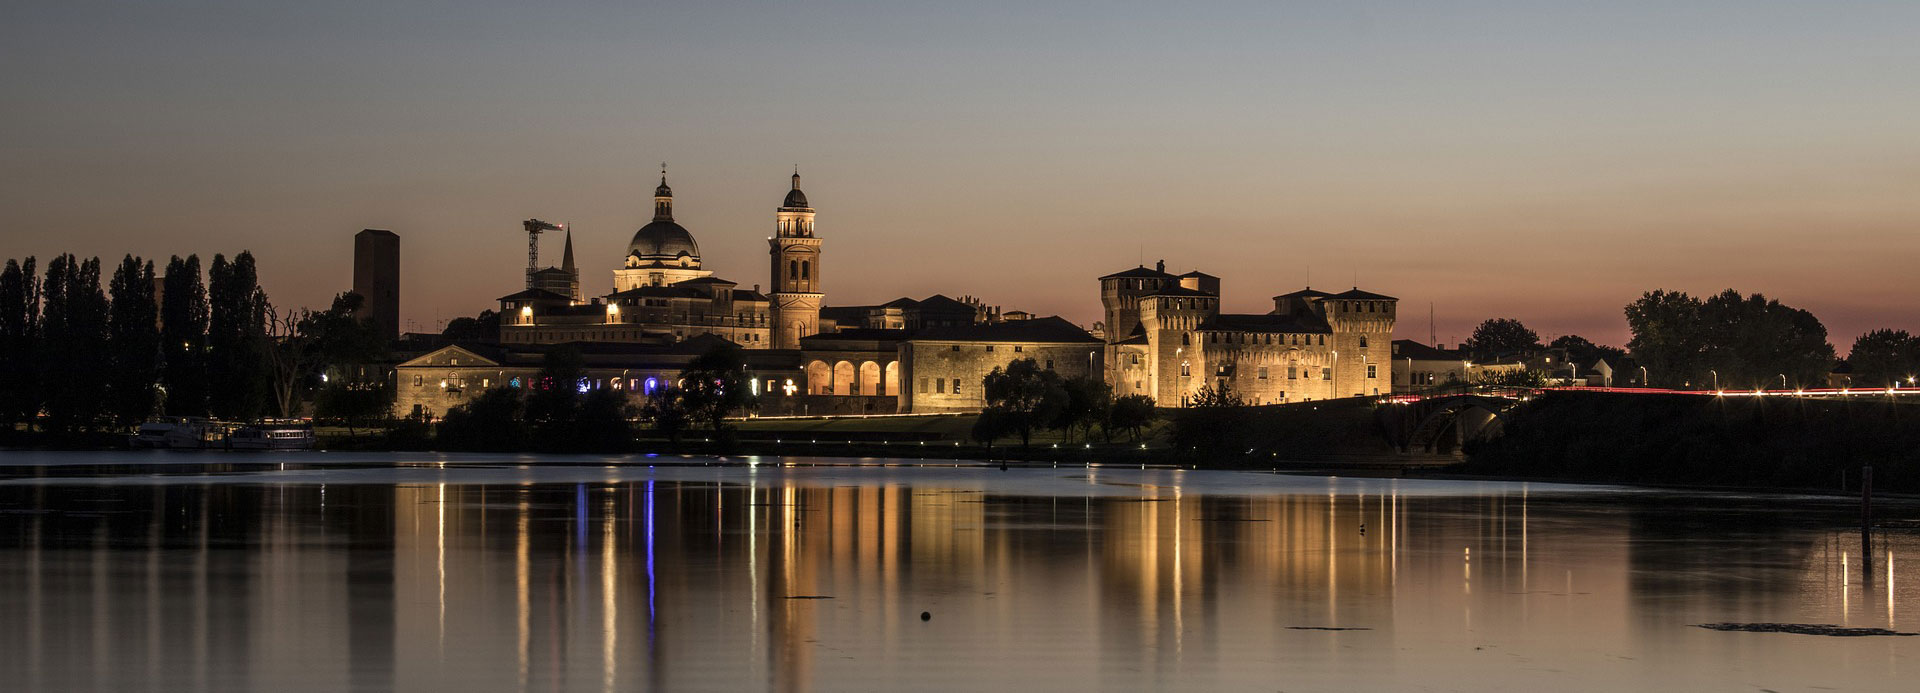 Immagine sfondo Mantova: tramonto